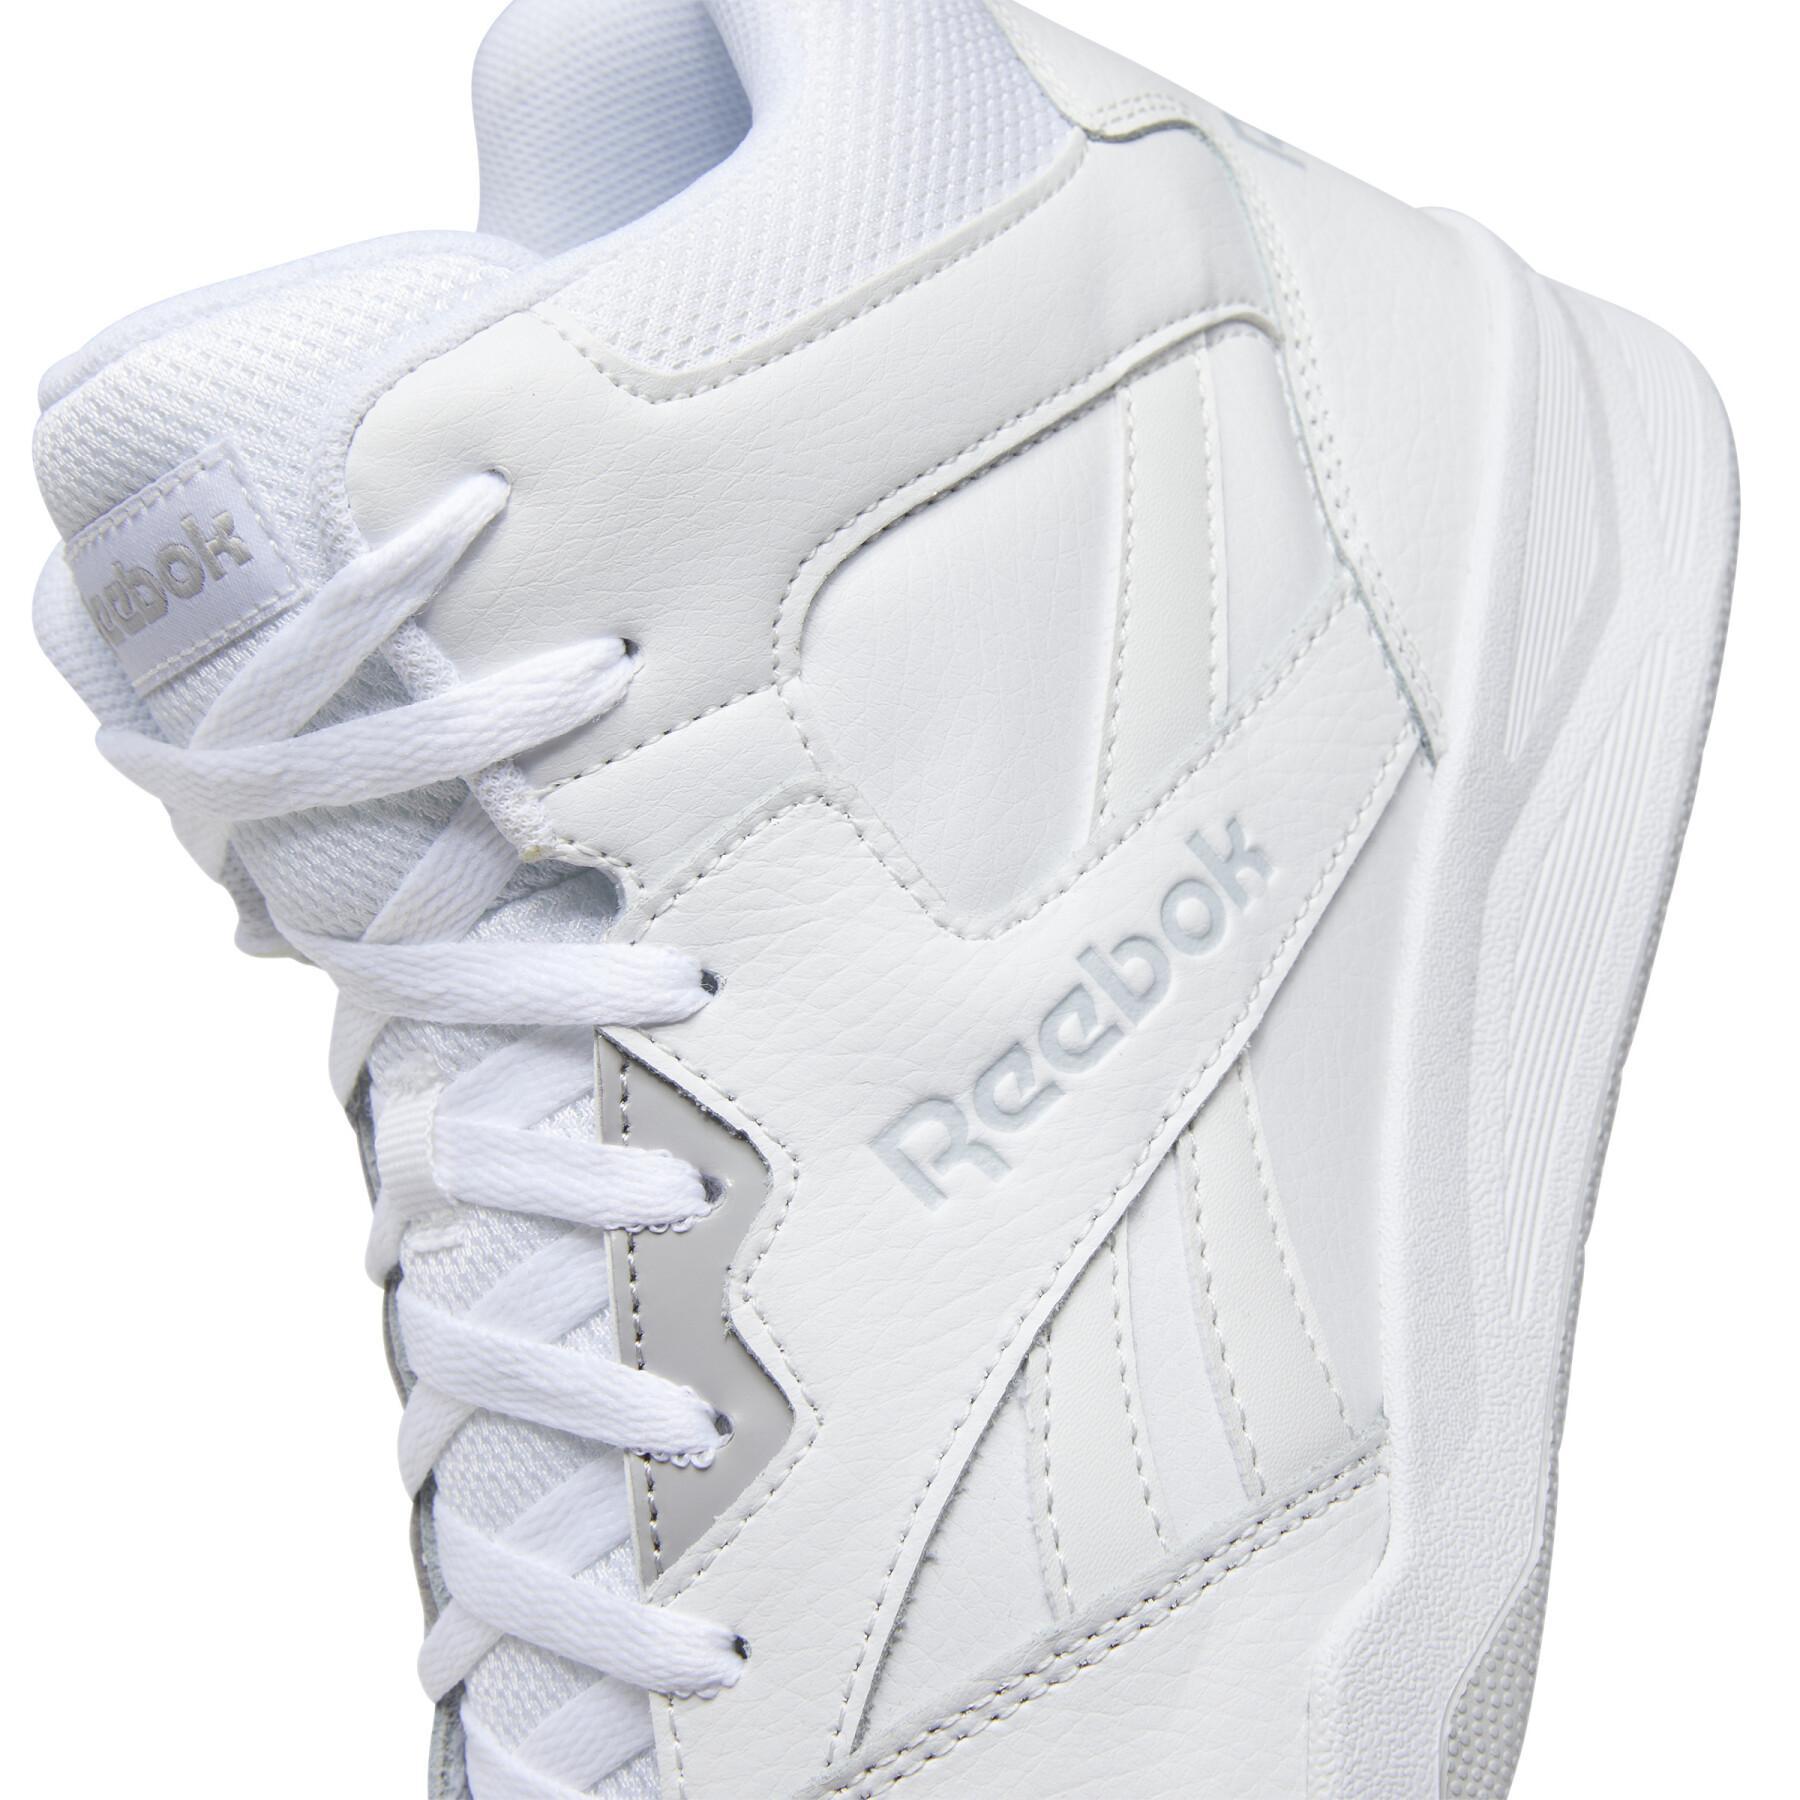 Schuhe Reebok Classics Royal BB4500 HI2